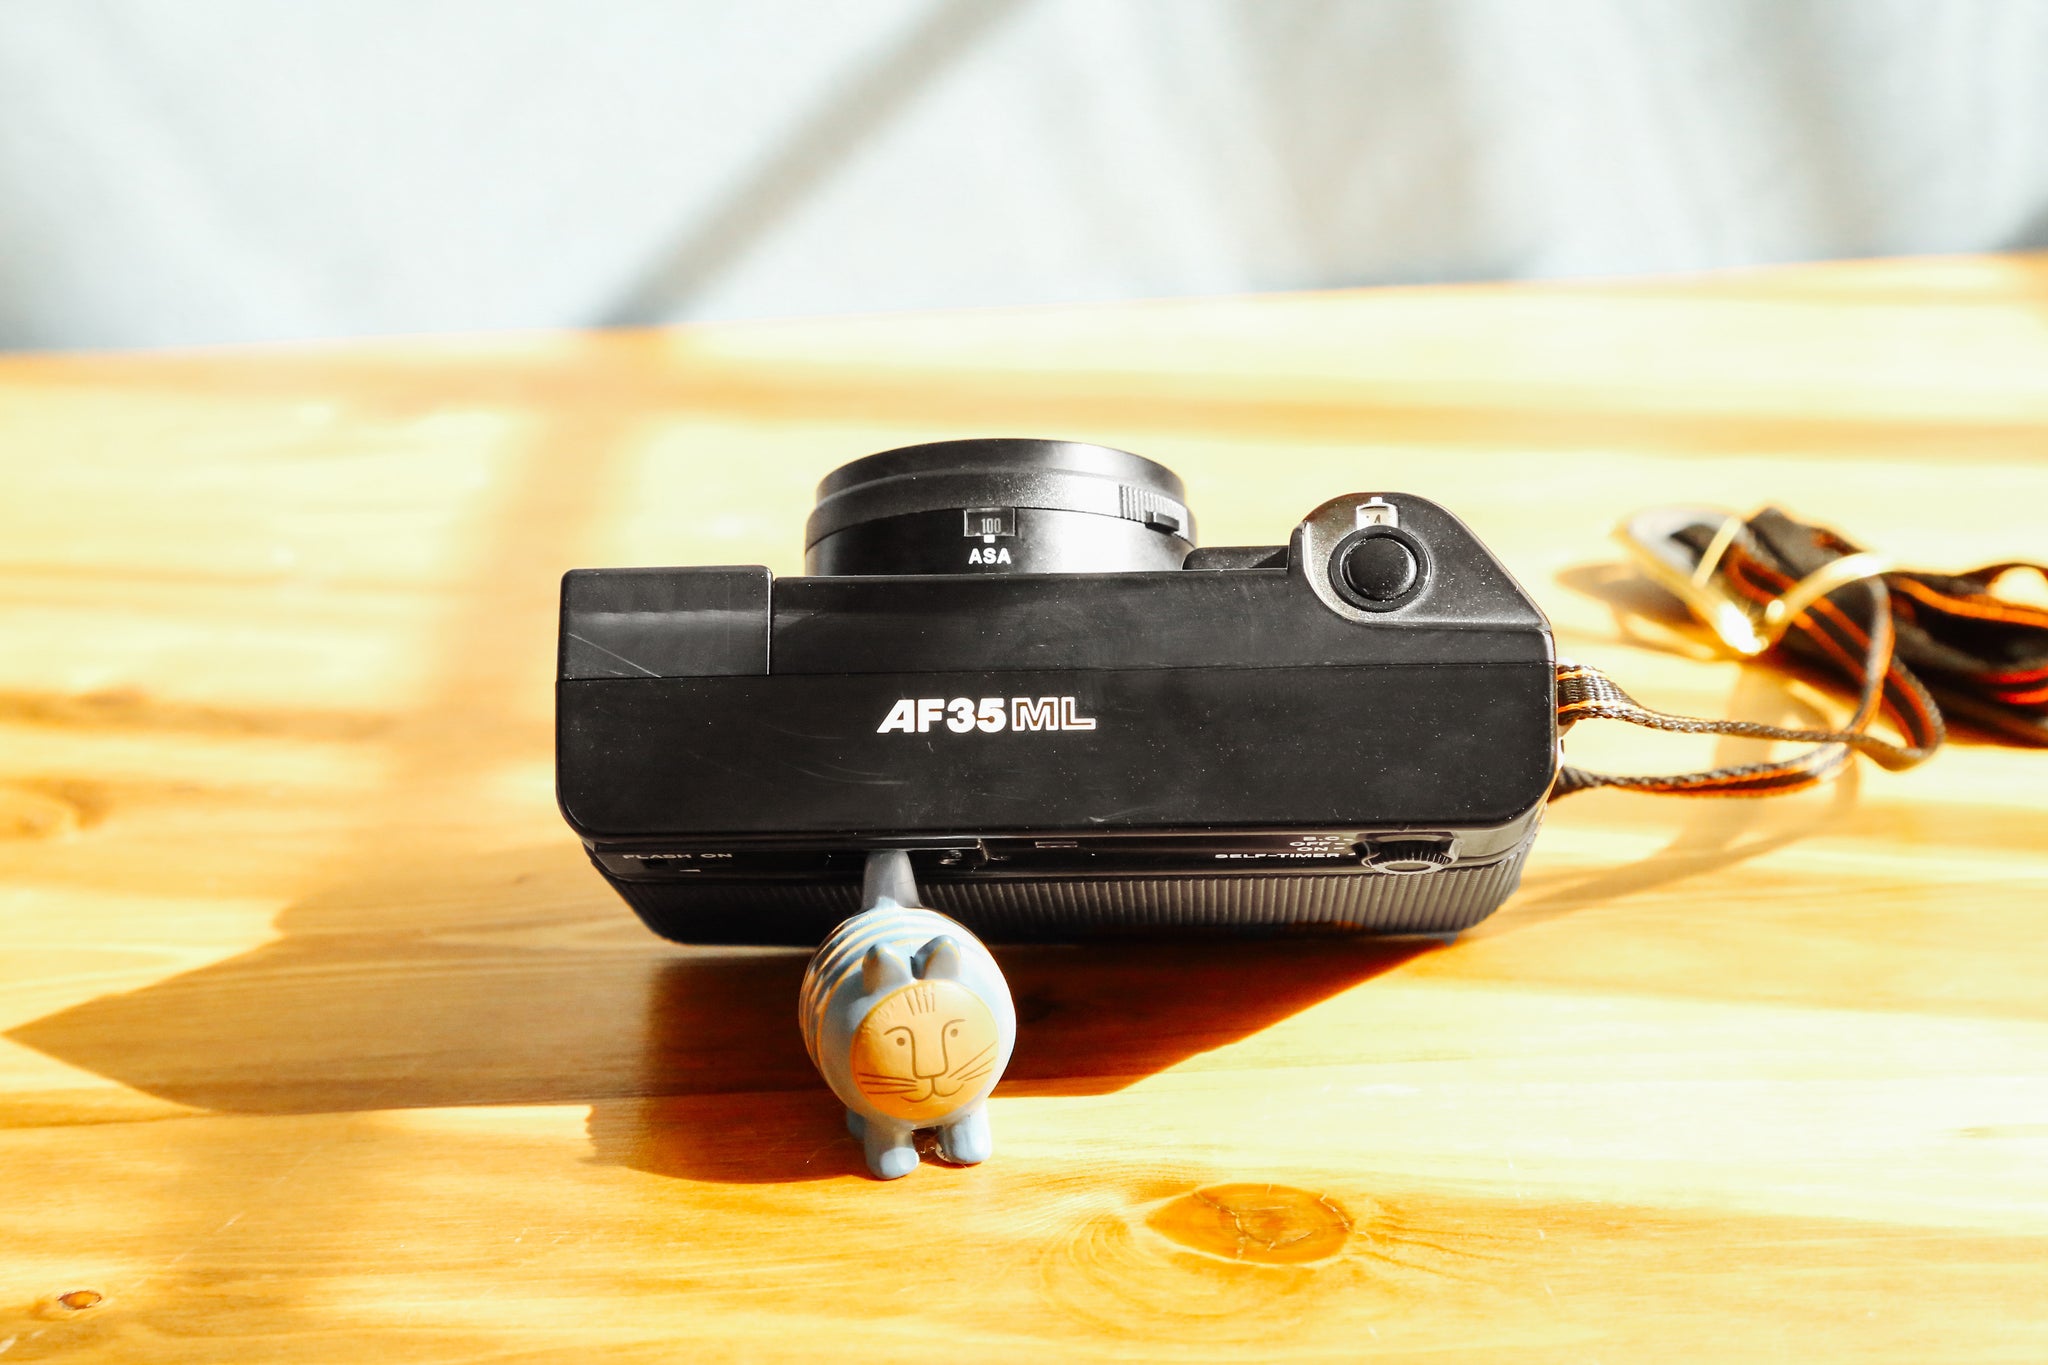 Canon AF35ML【動作品】 – Ein Camera